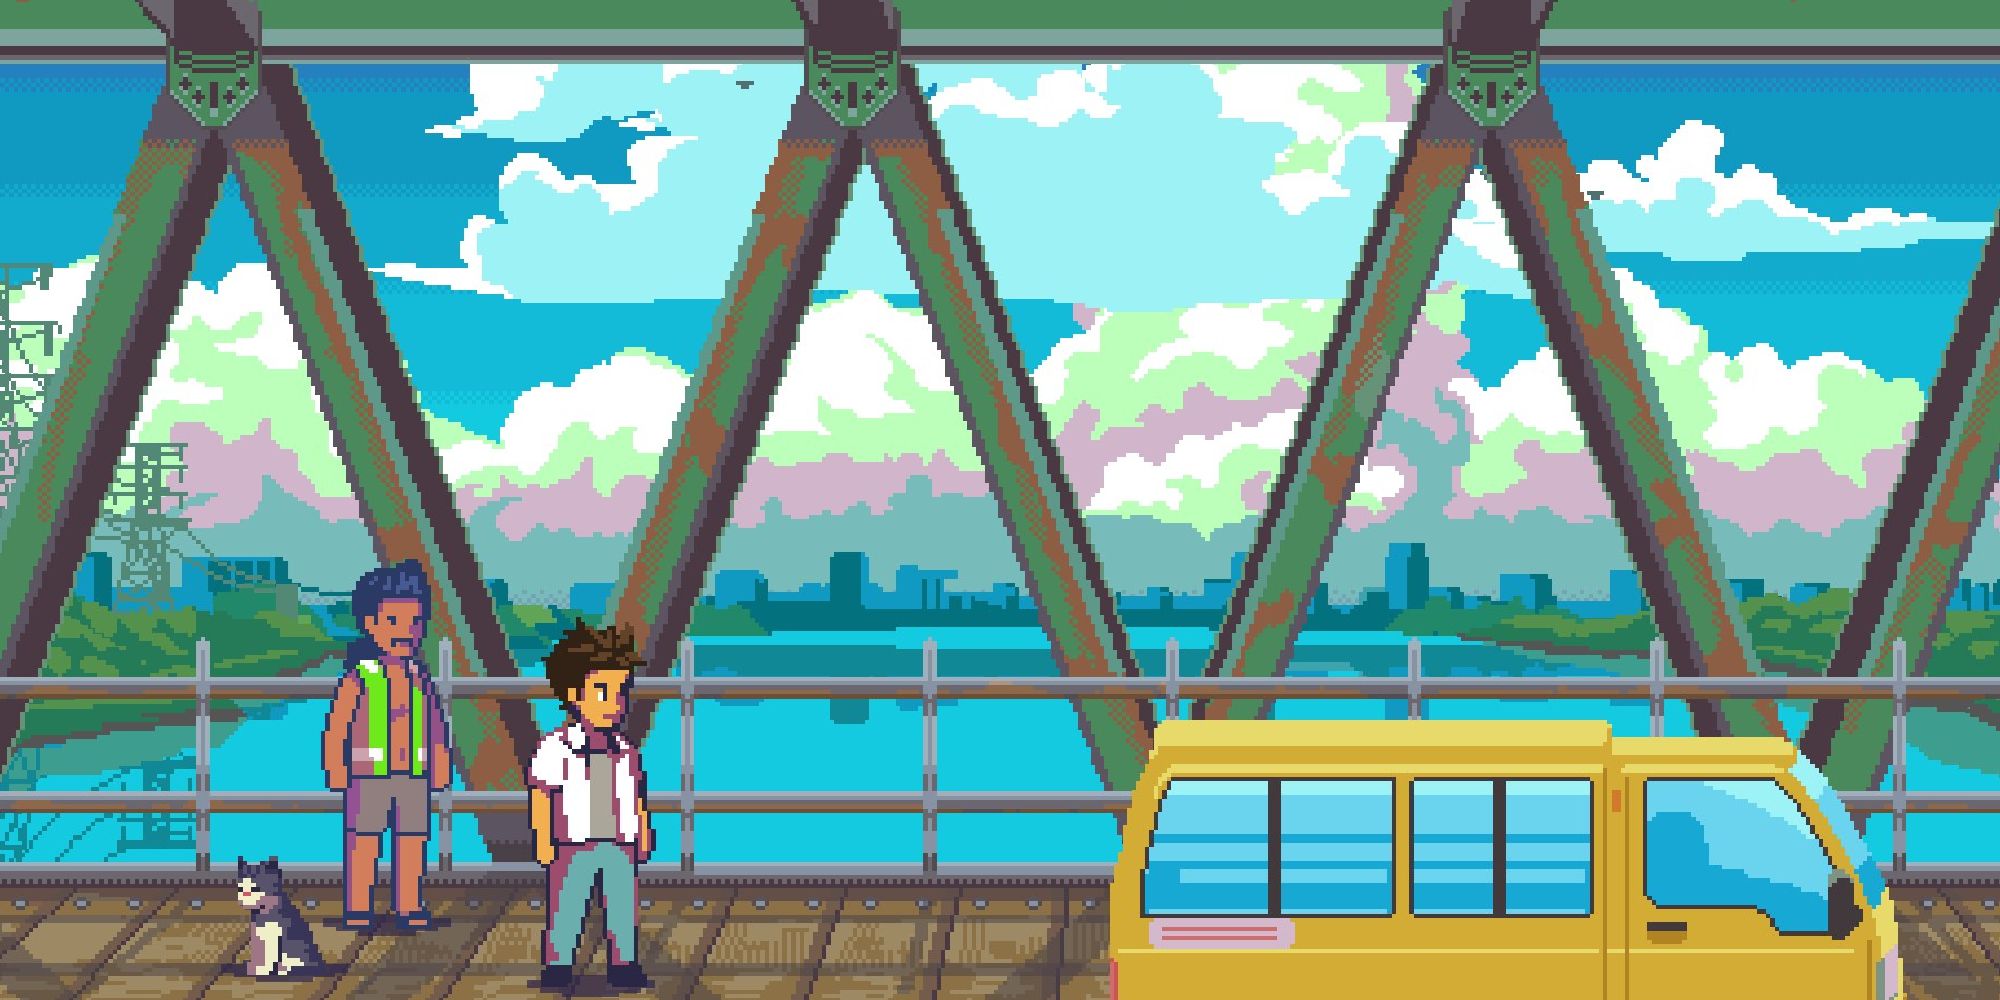 atma standing next to man on a bridge